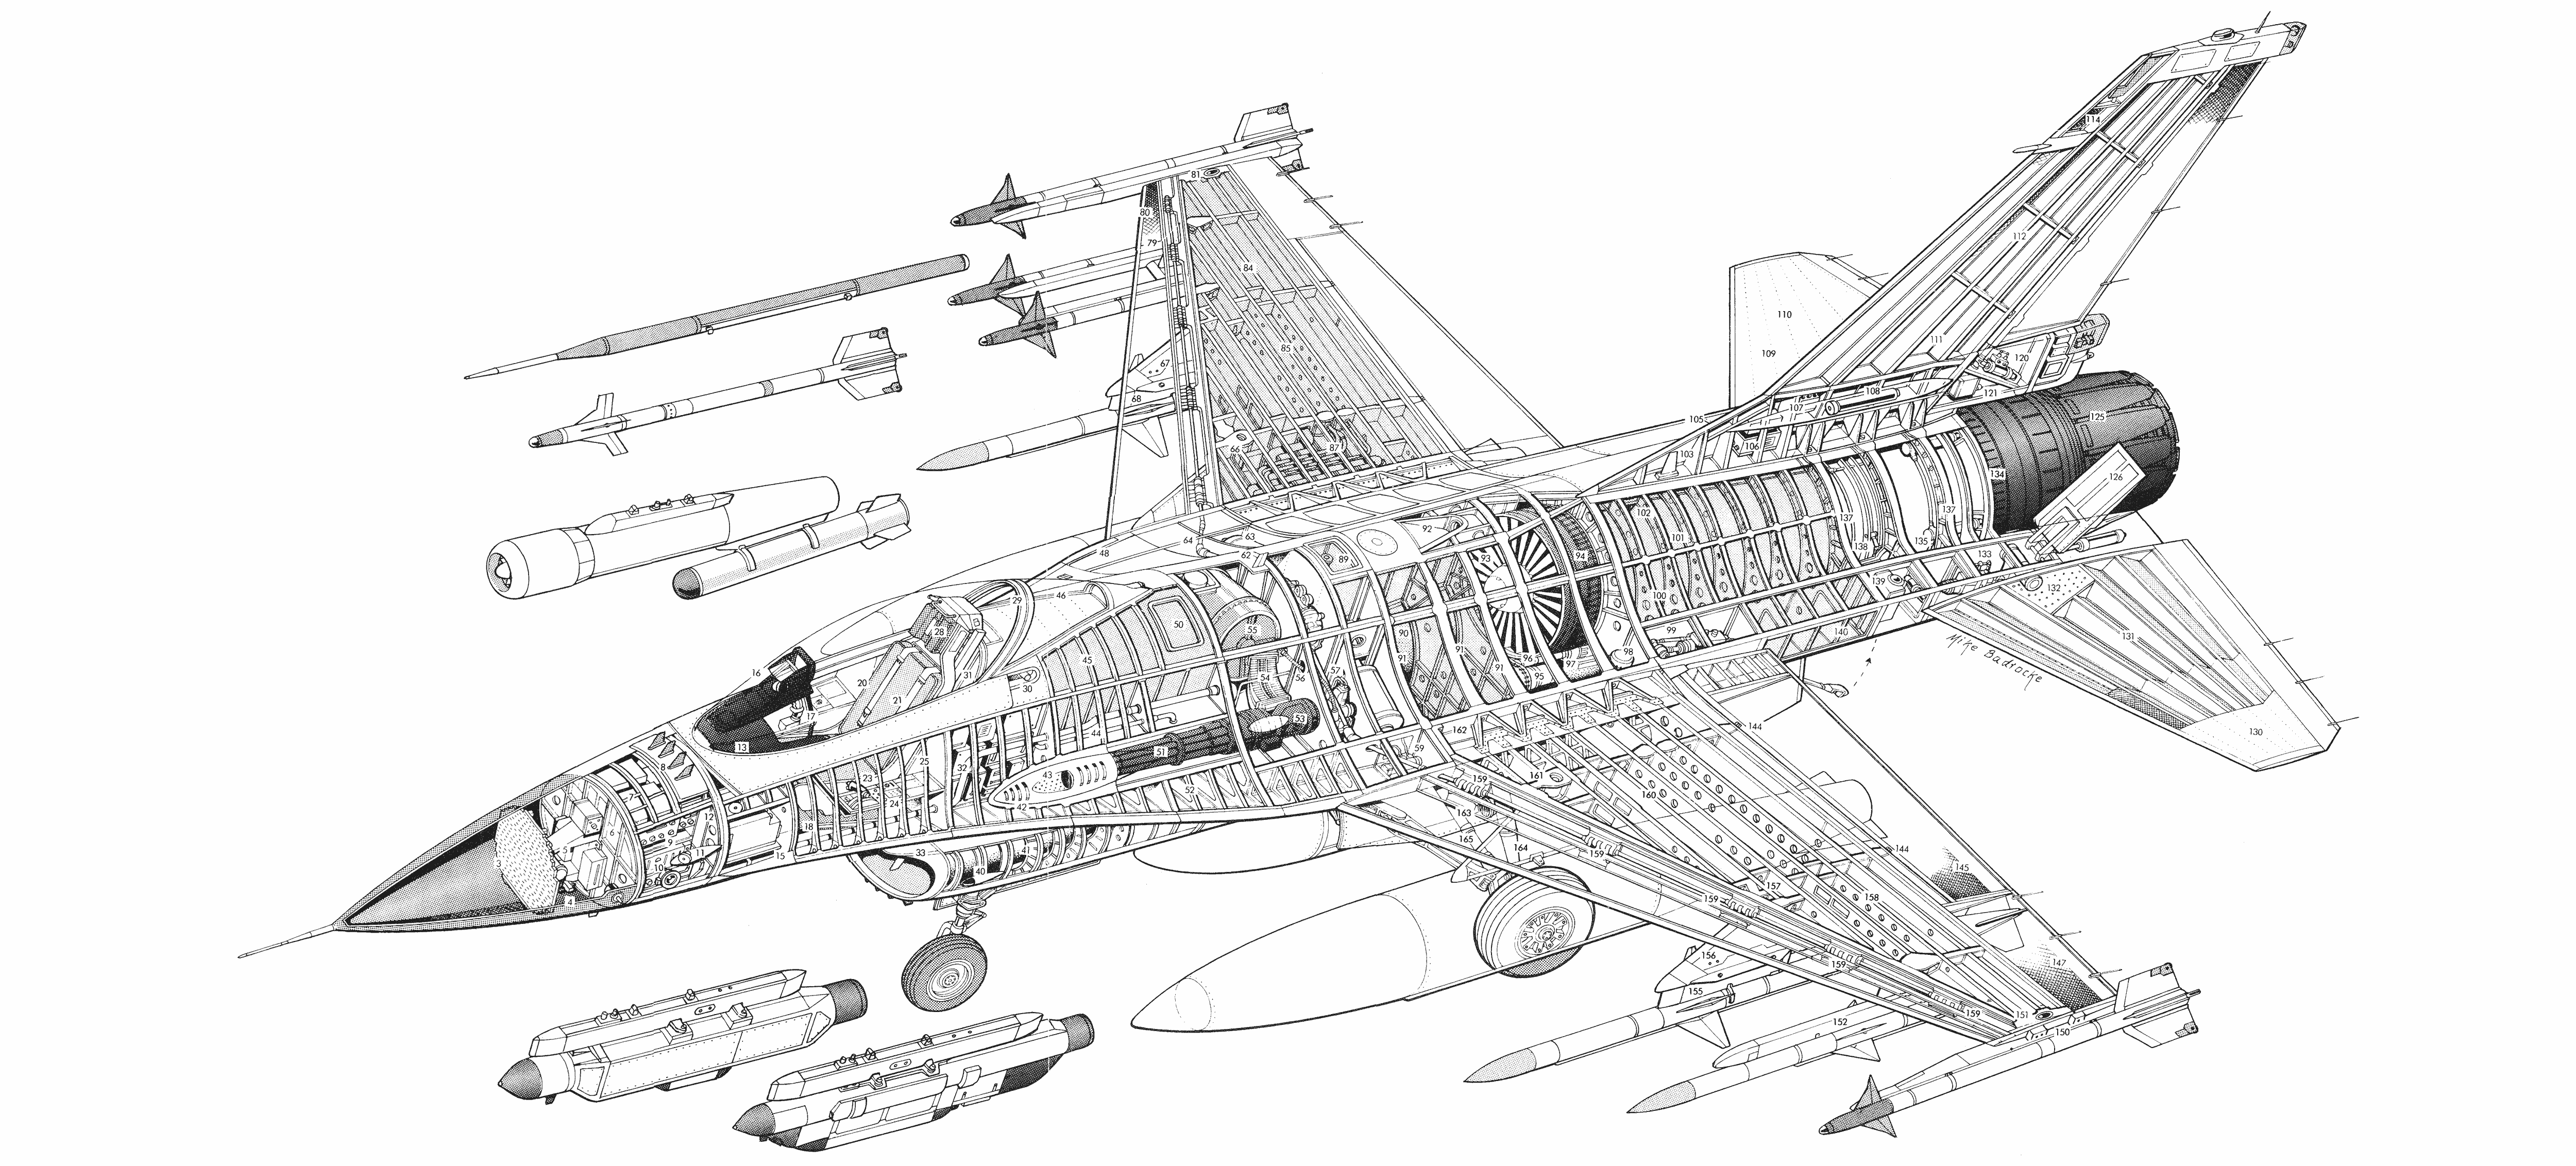 F-16 Fighting Falcon cutaway